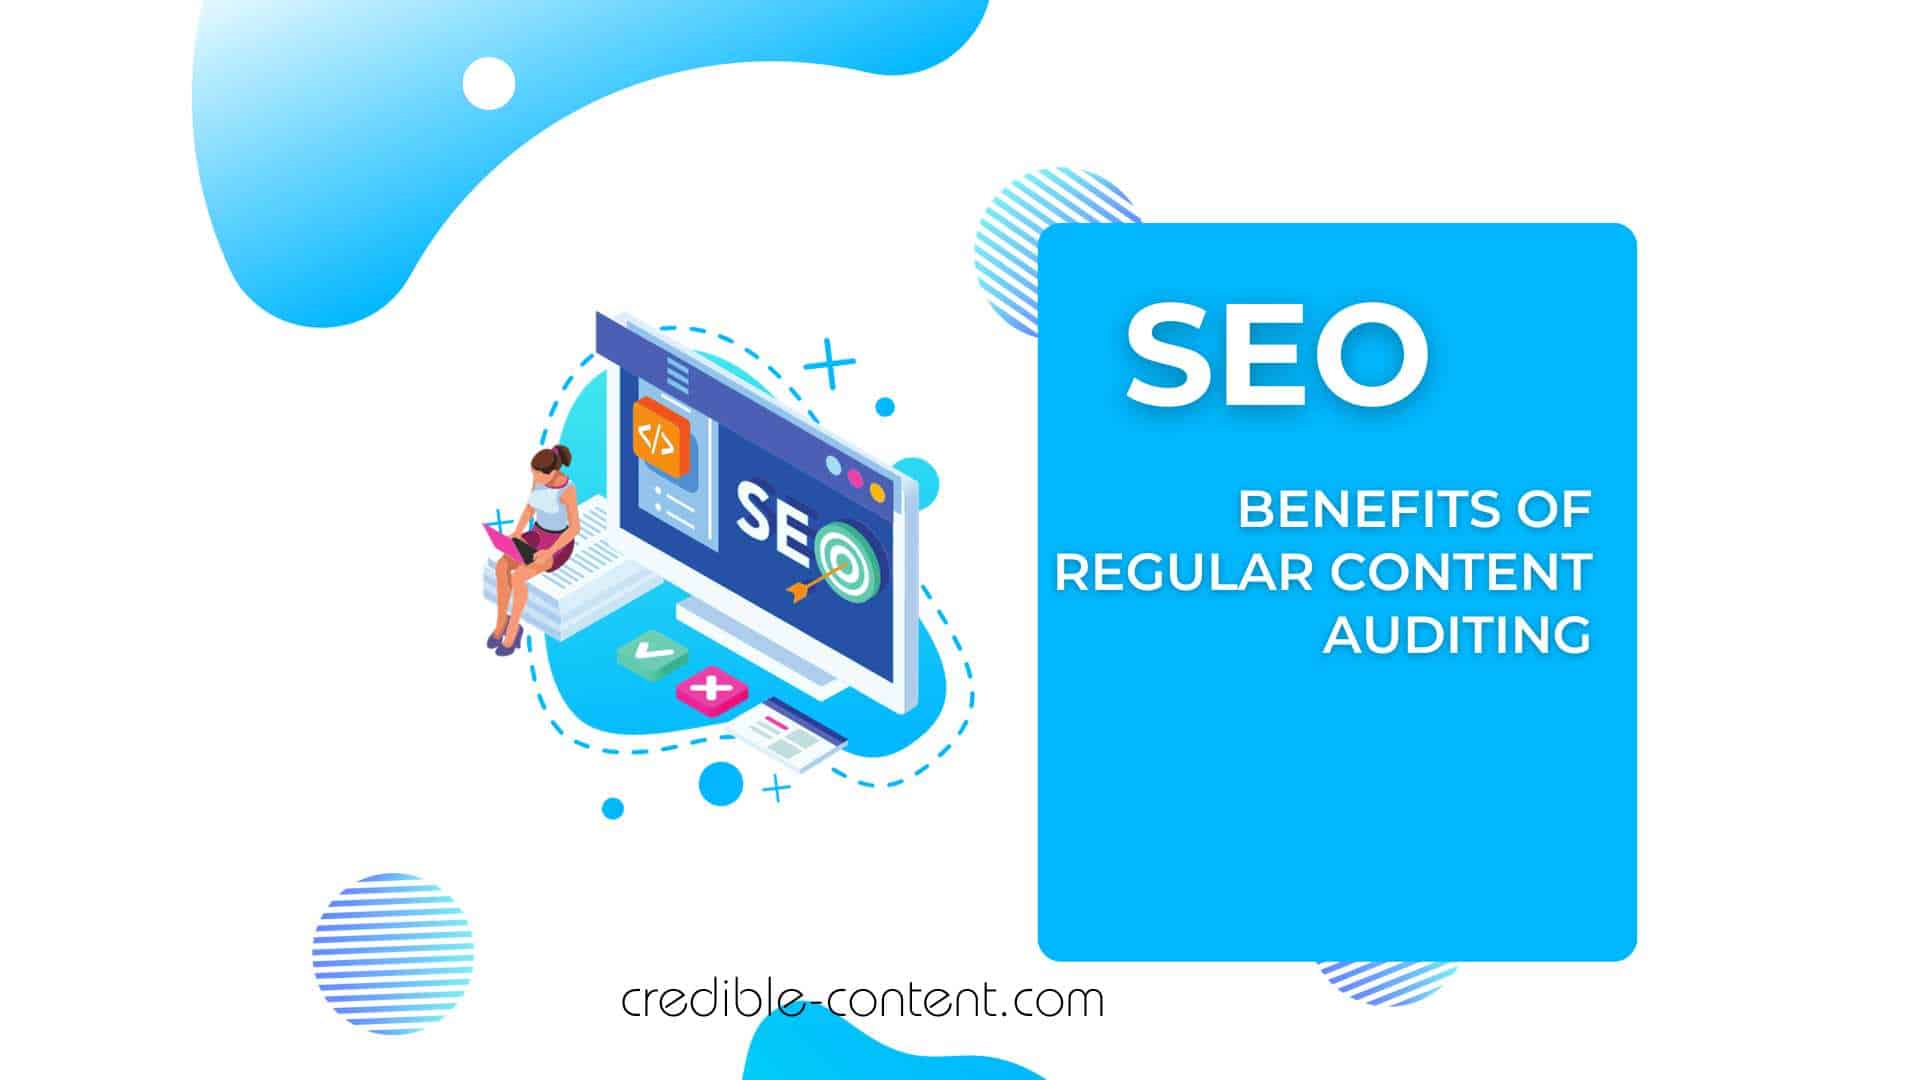 SEO benefits of regular content auditing